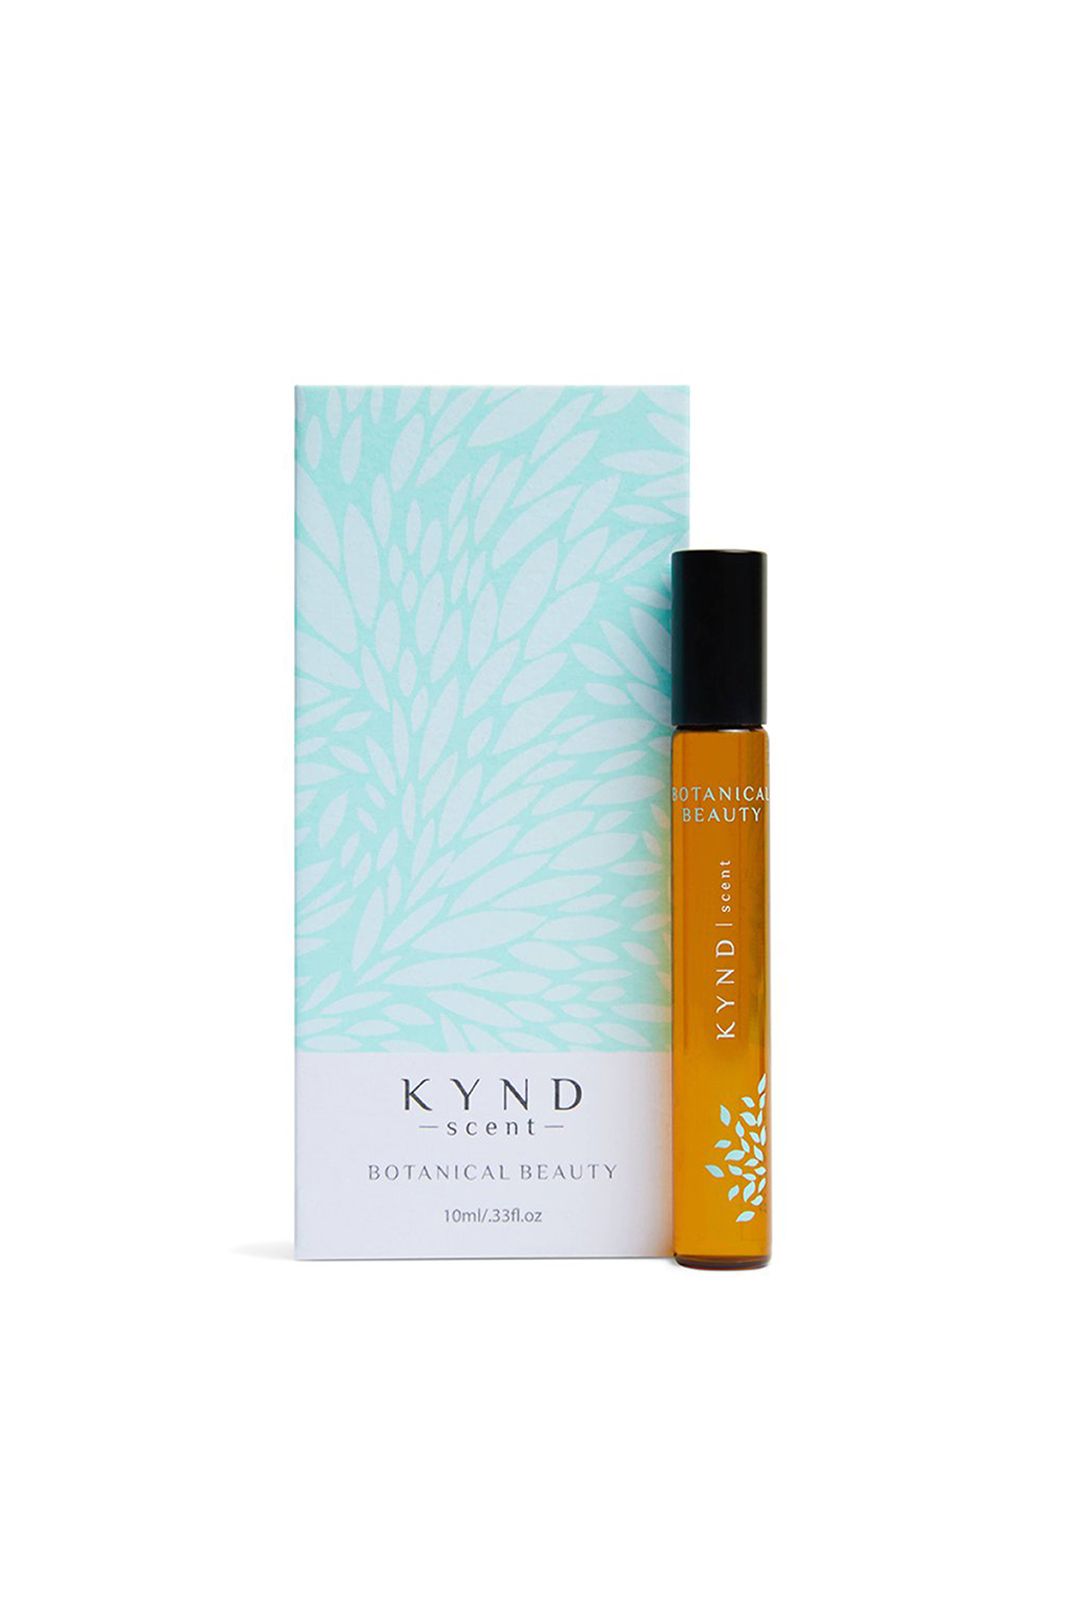 kynd-scent-botanical-beauty-product-1